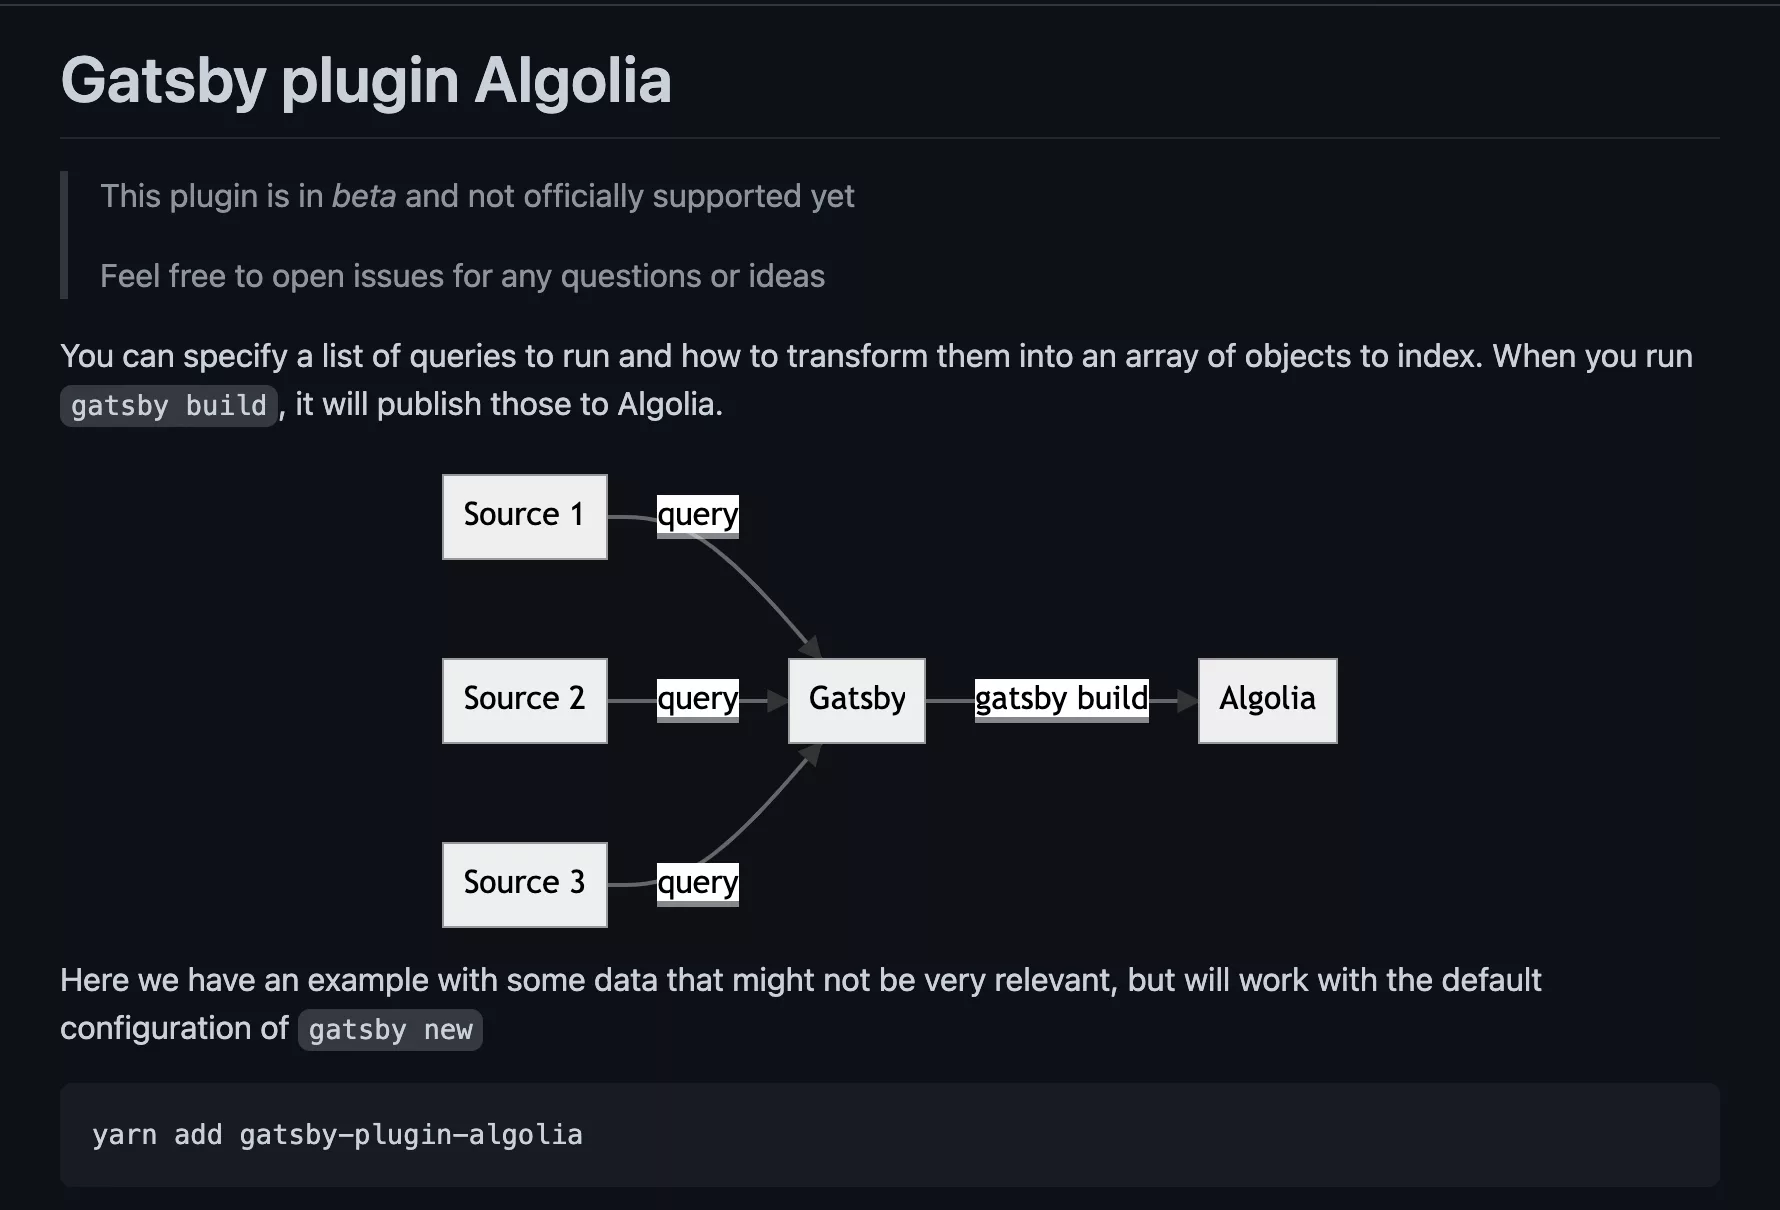 Gatsby's Github documentation on their Algolia plugin